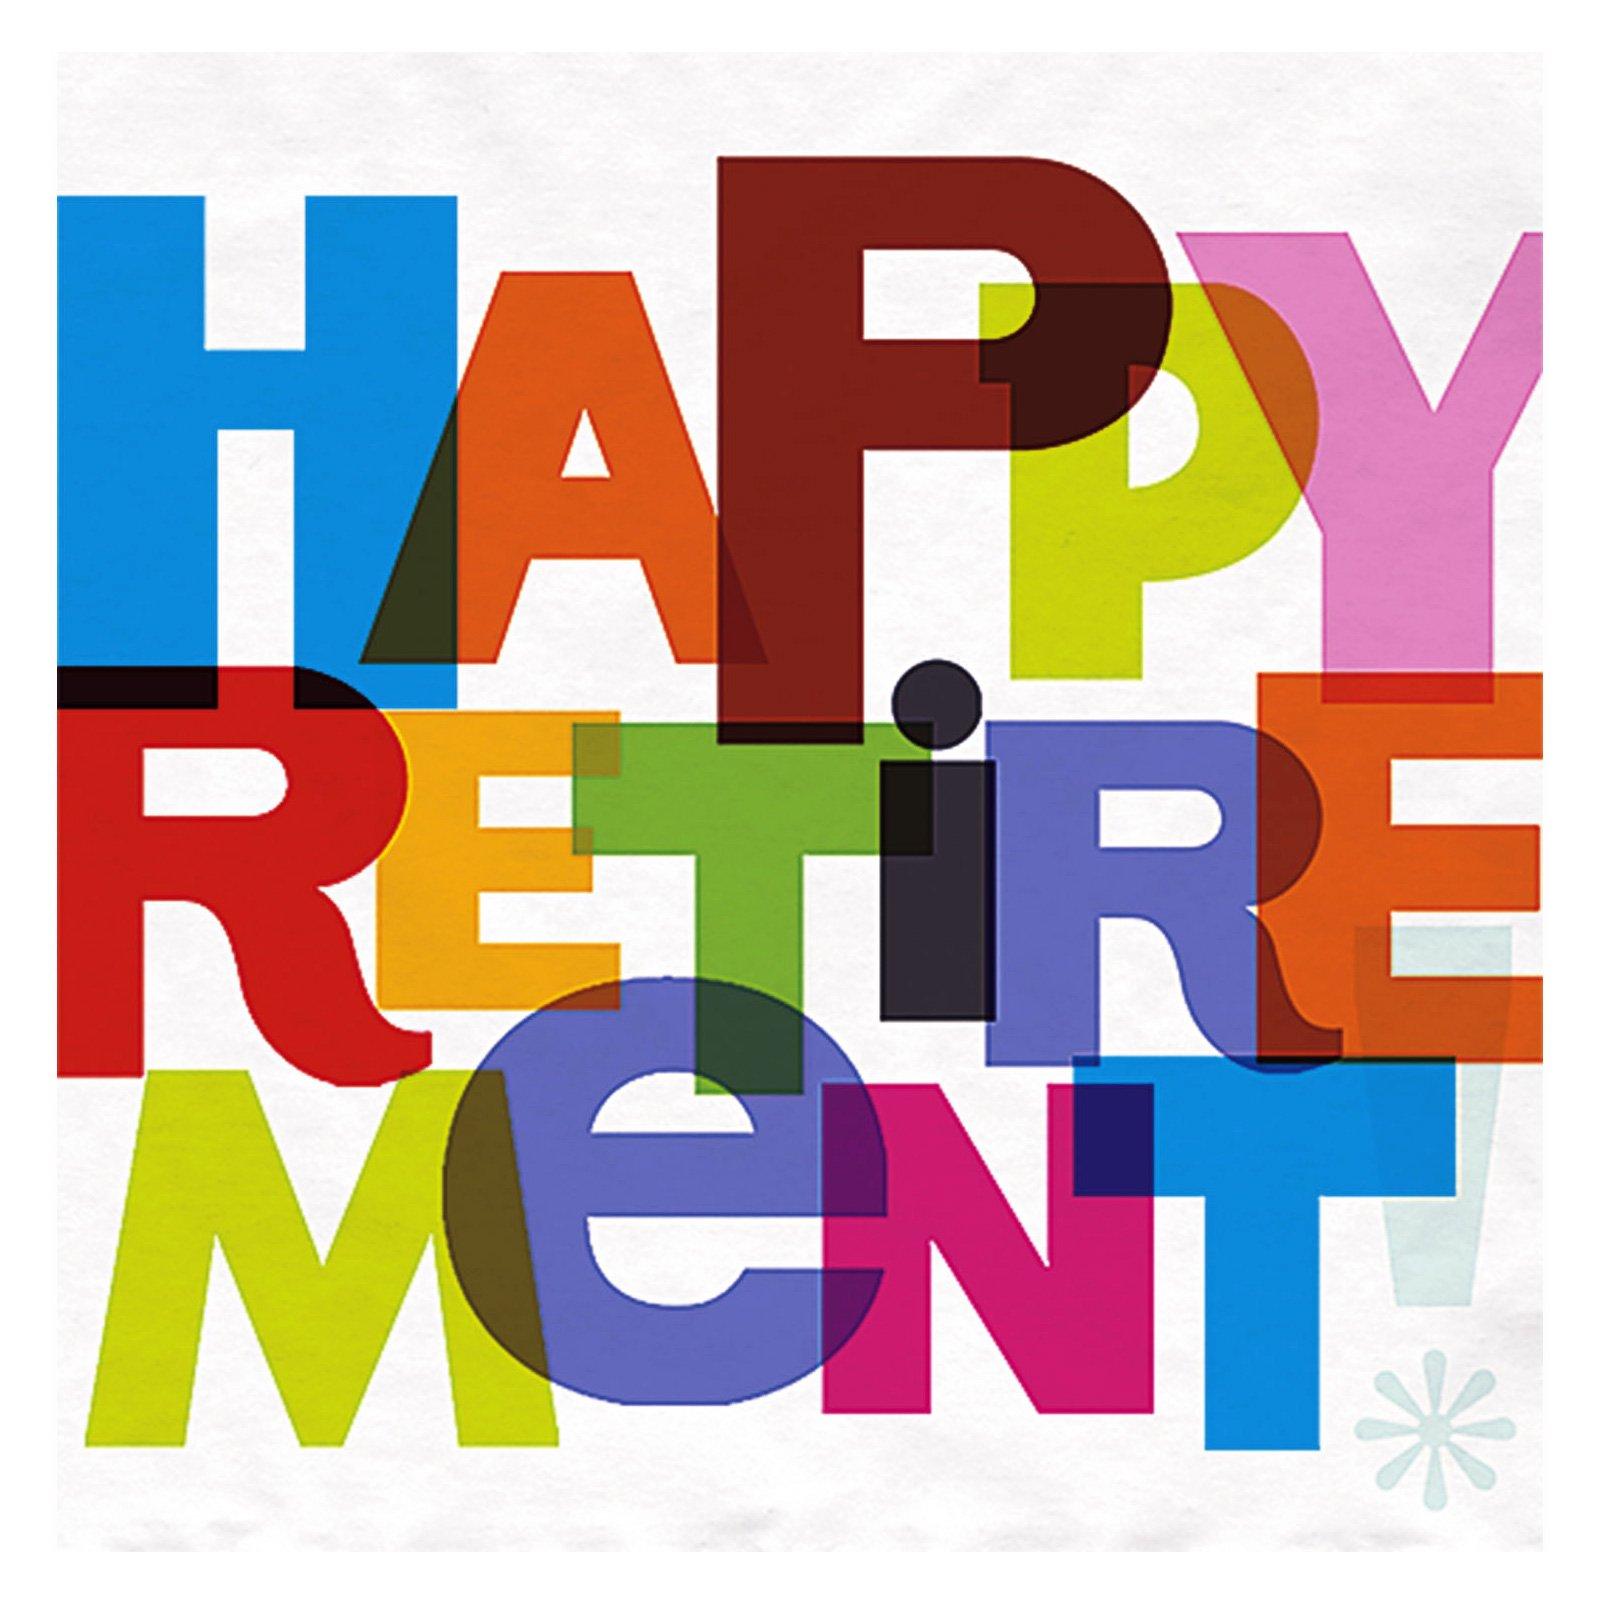 Free Retirement Clip Art Pictures 